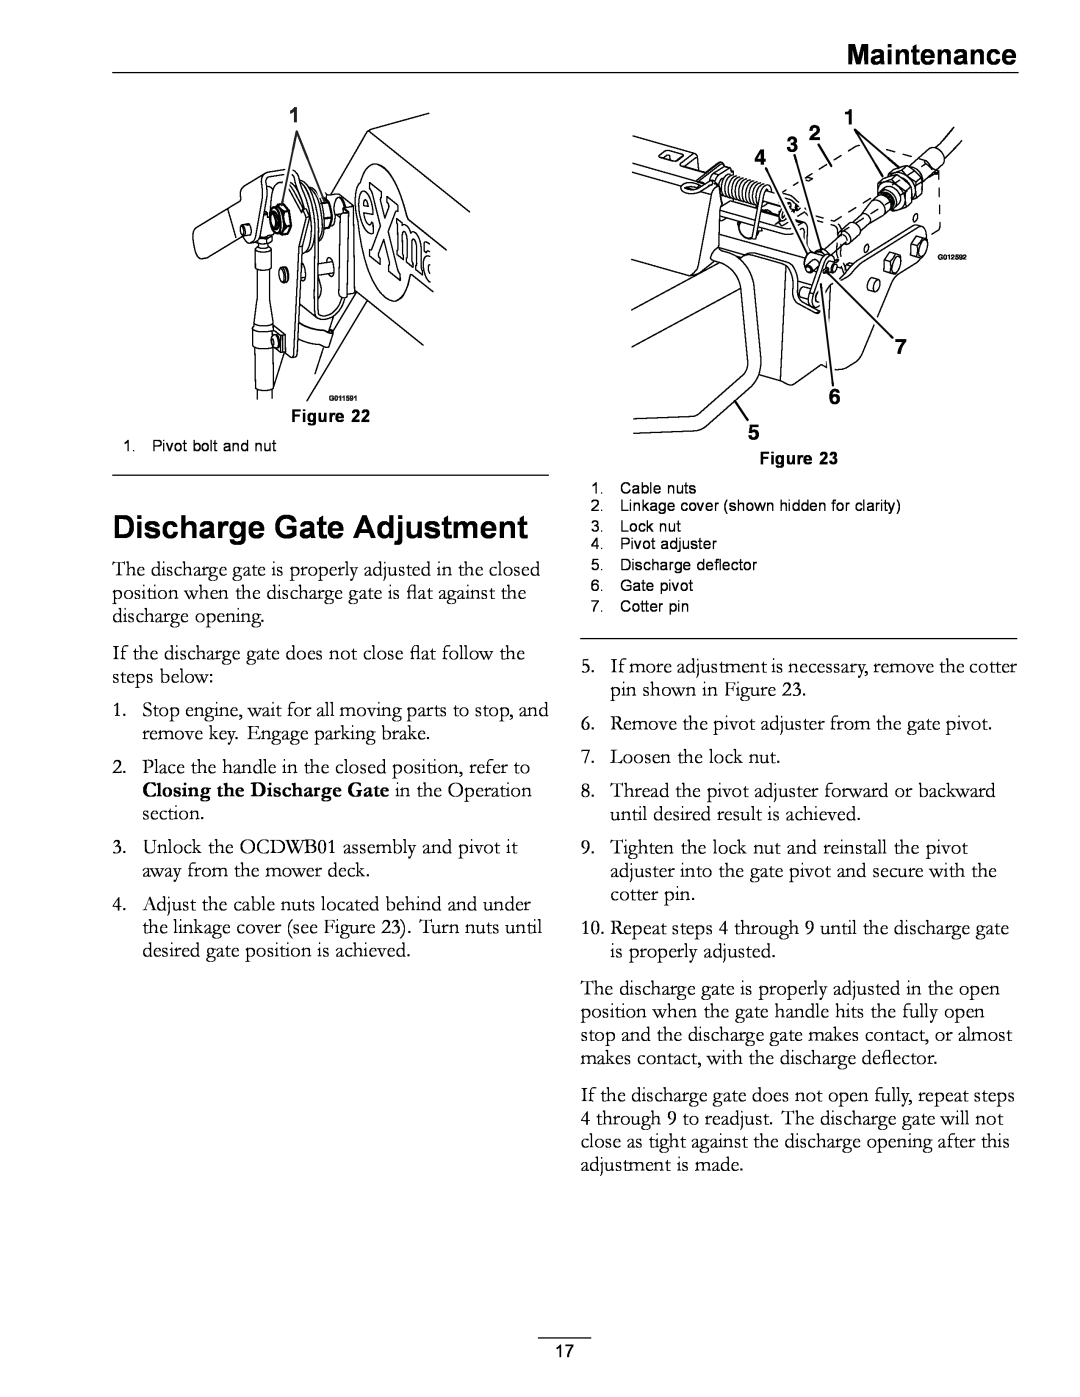 Exmark OCDWB01 manual Discharge Gate Adjustment, Maintenance, Pivot bolt and nut 